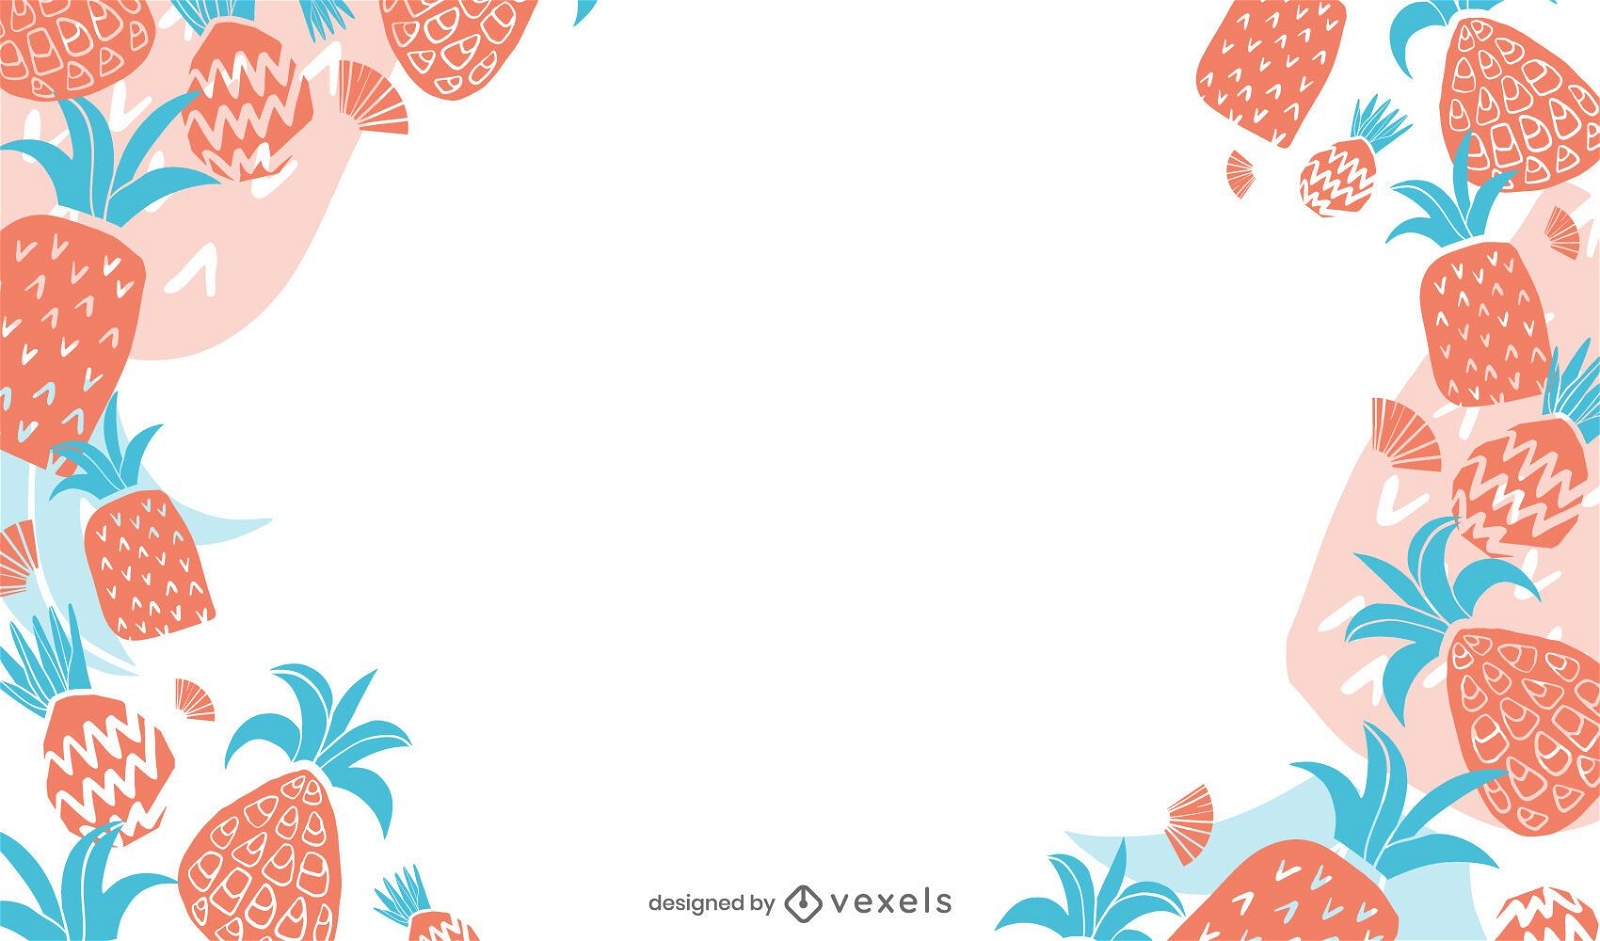 Pineapple background design